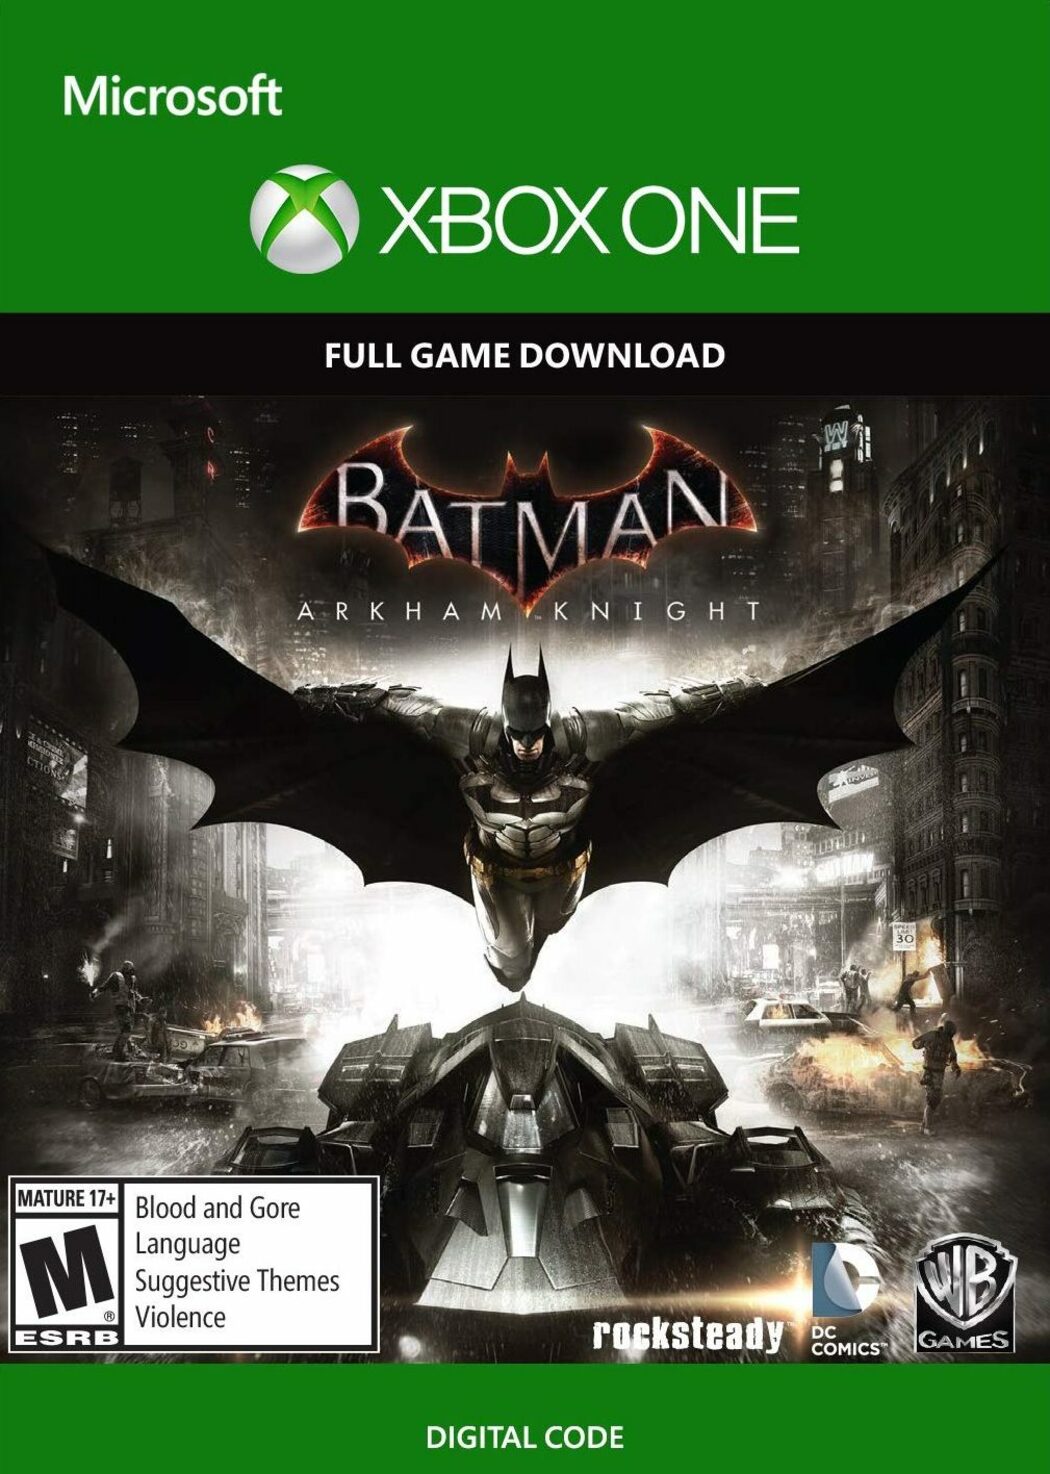 Buy Batman Arkham Knight Xbox One CD key cheaper now! | ENEBA